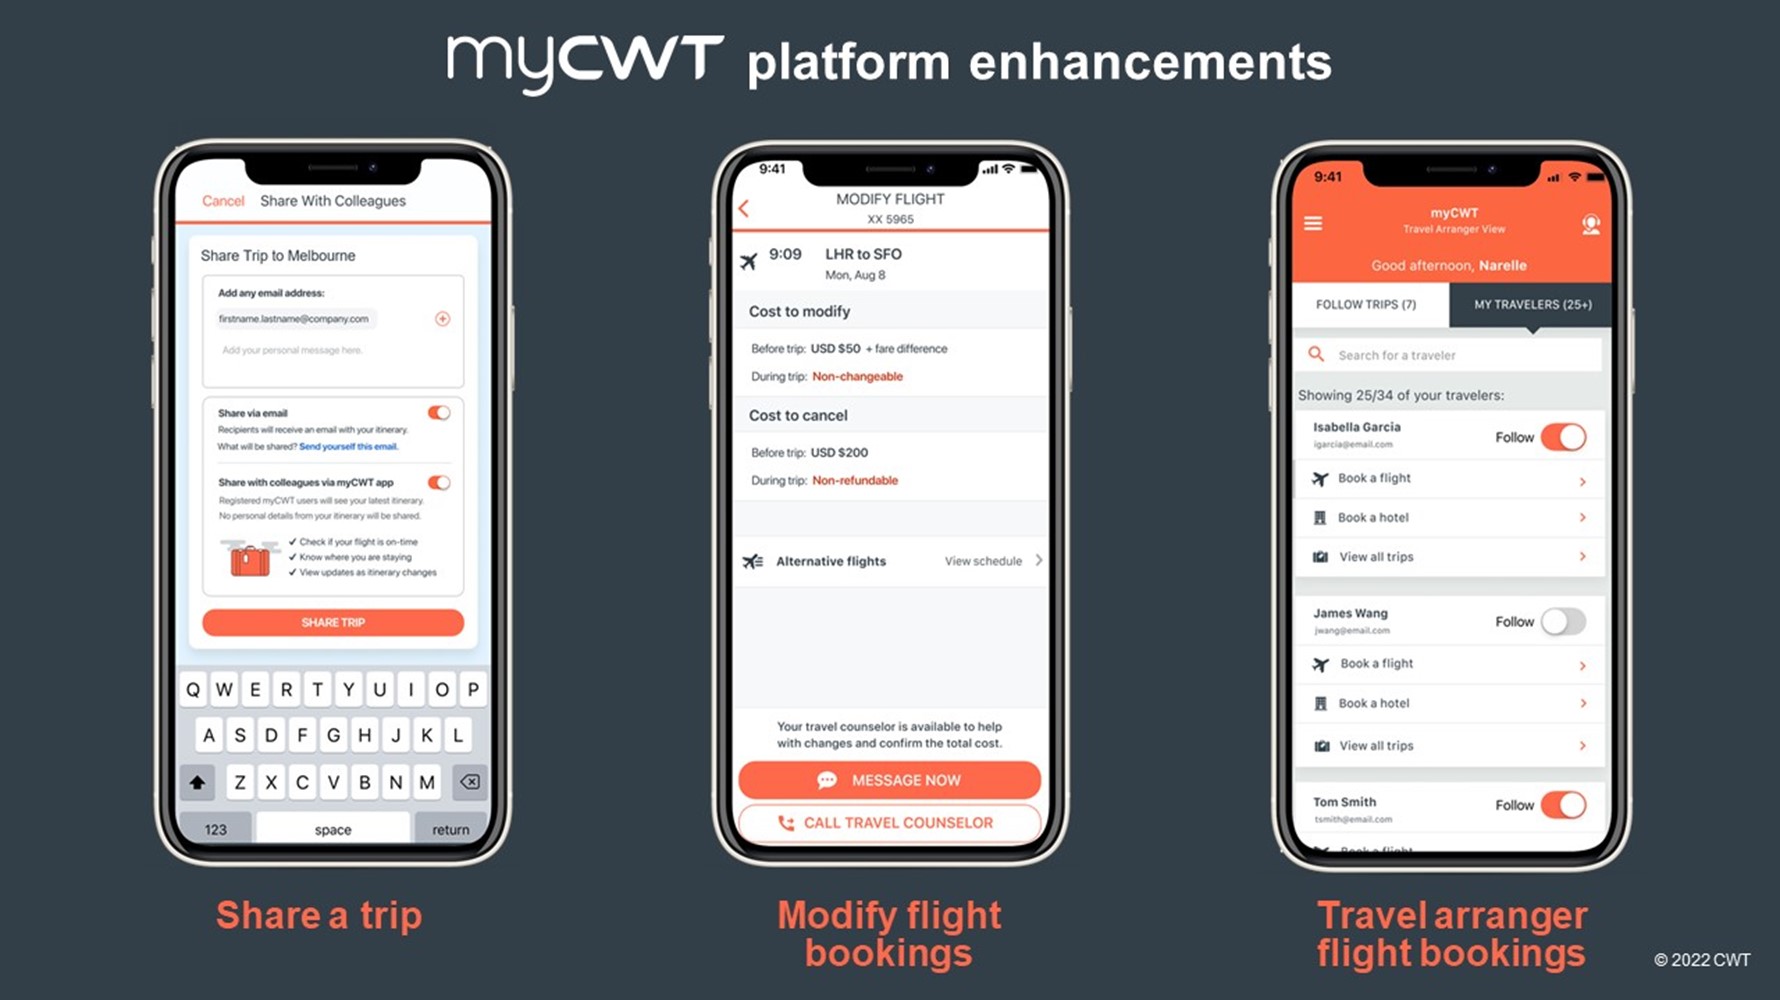 mycwt travel management app cwt